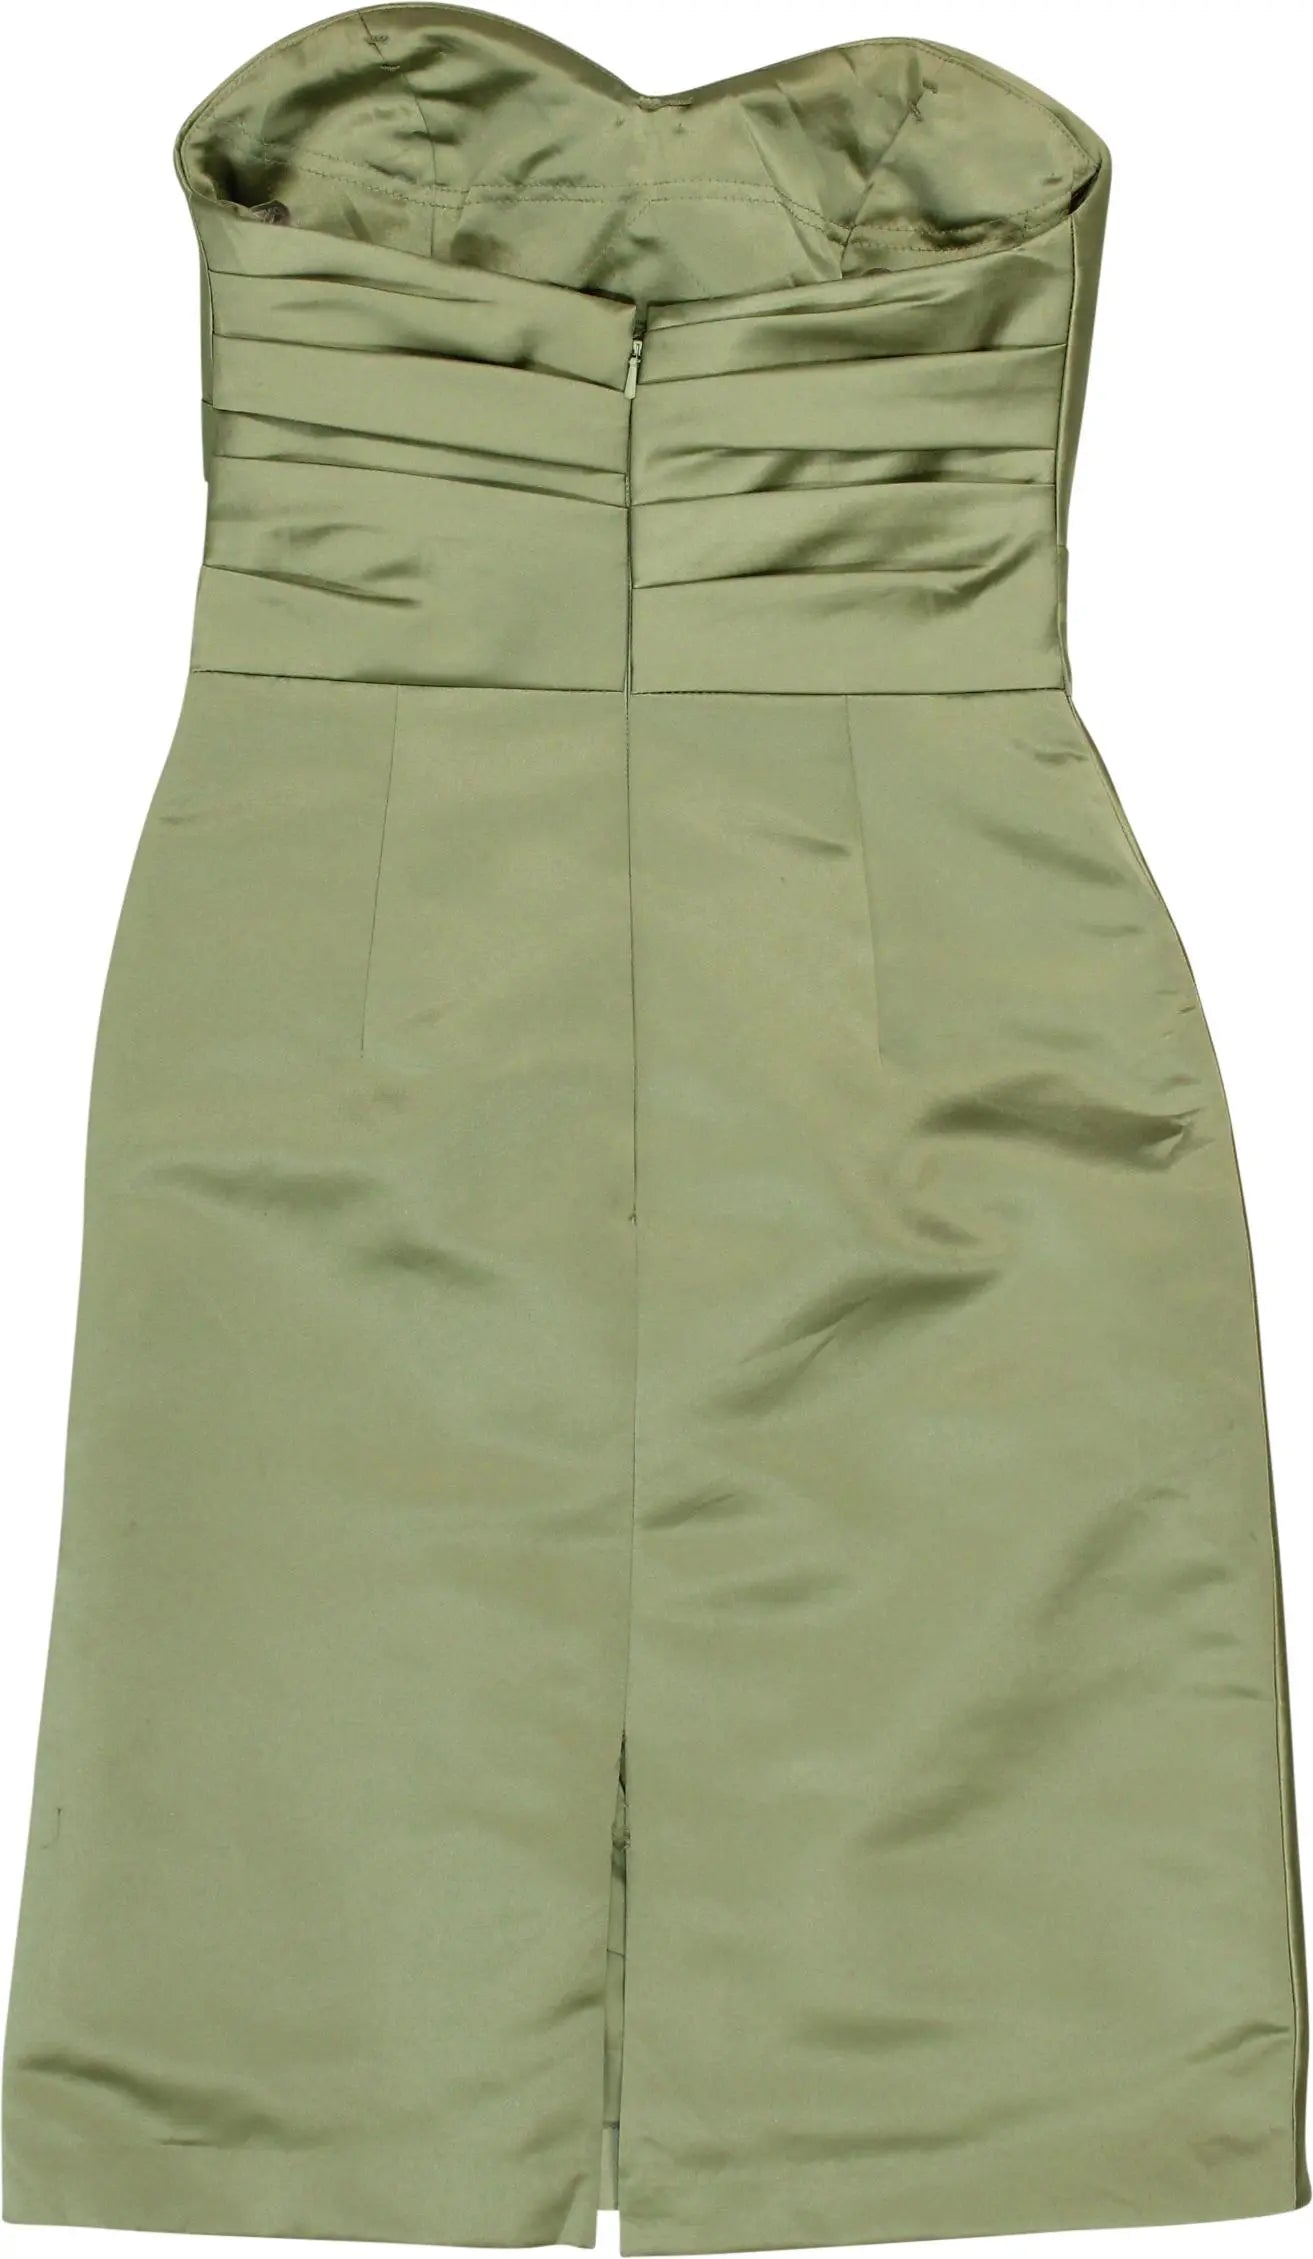 Bill Levkof - Green Satin Dress- ThriftTale.com - Vintage and second handclothing